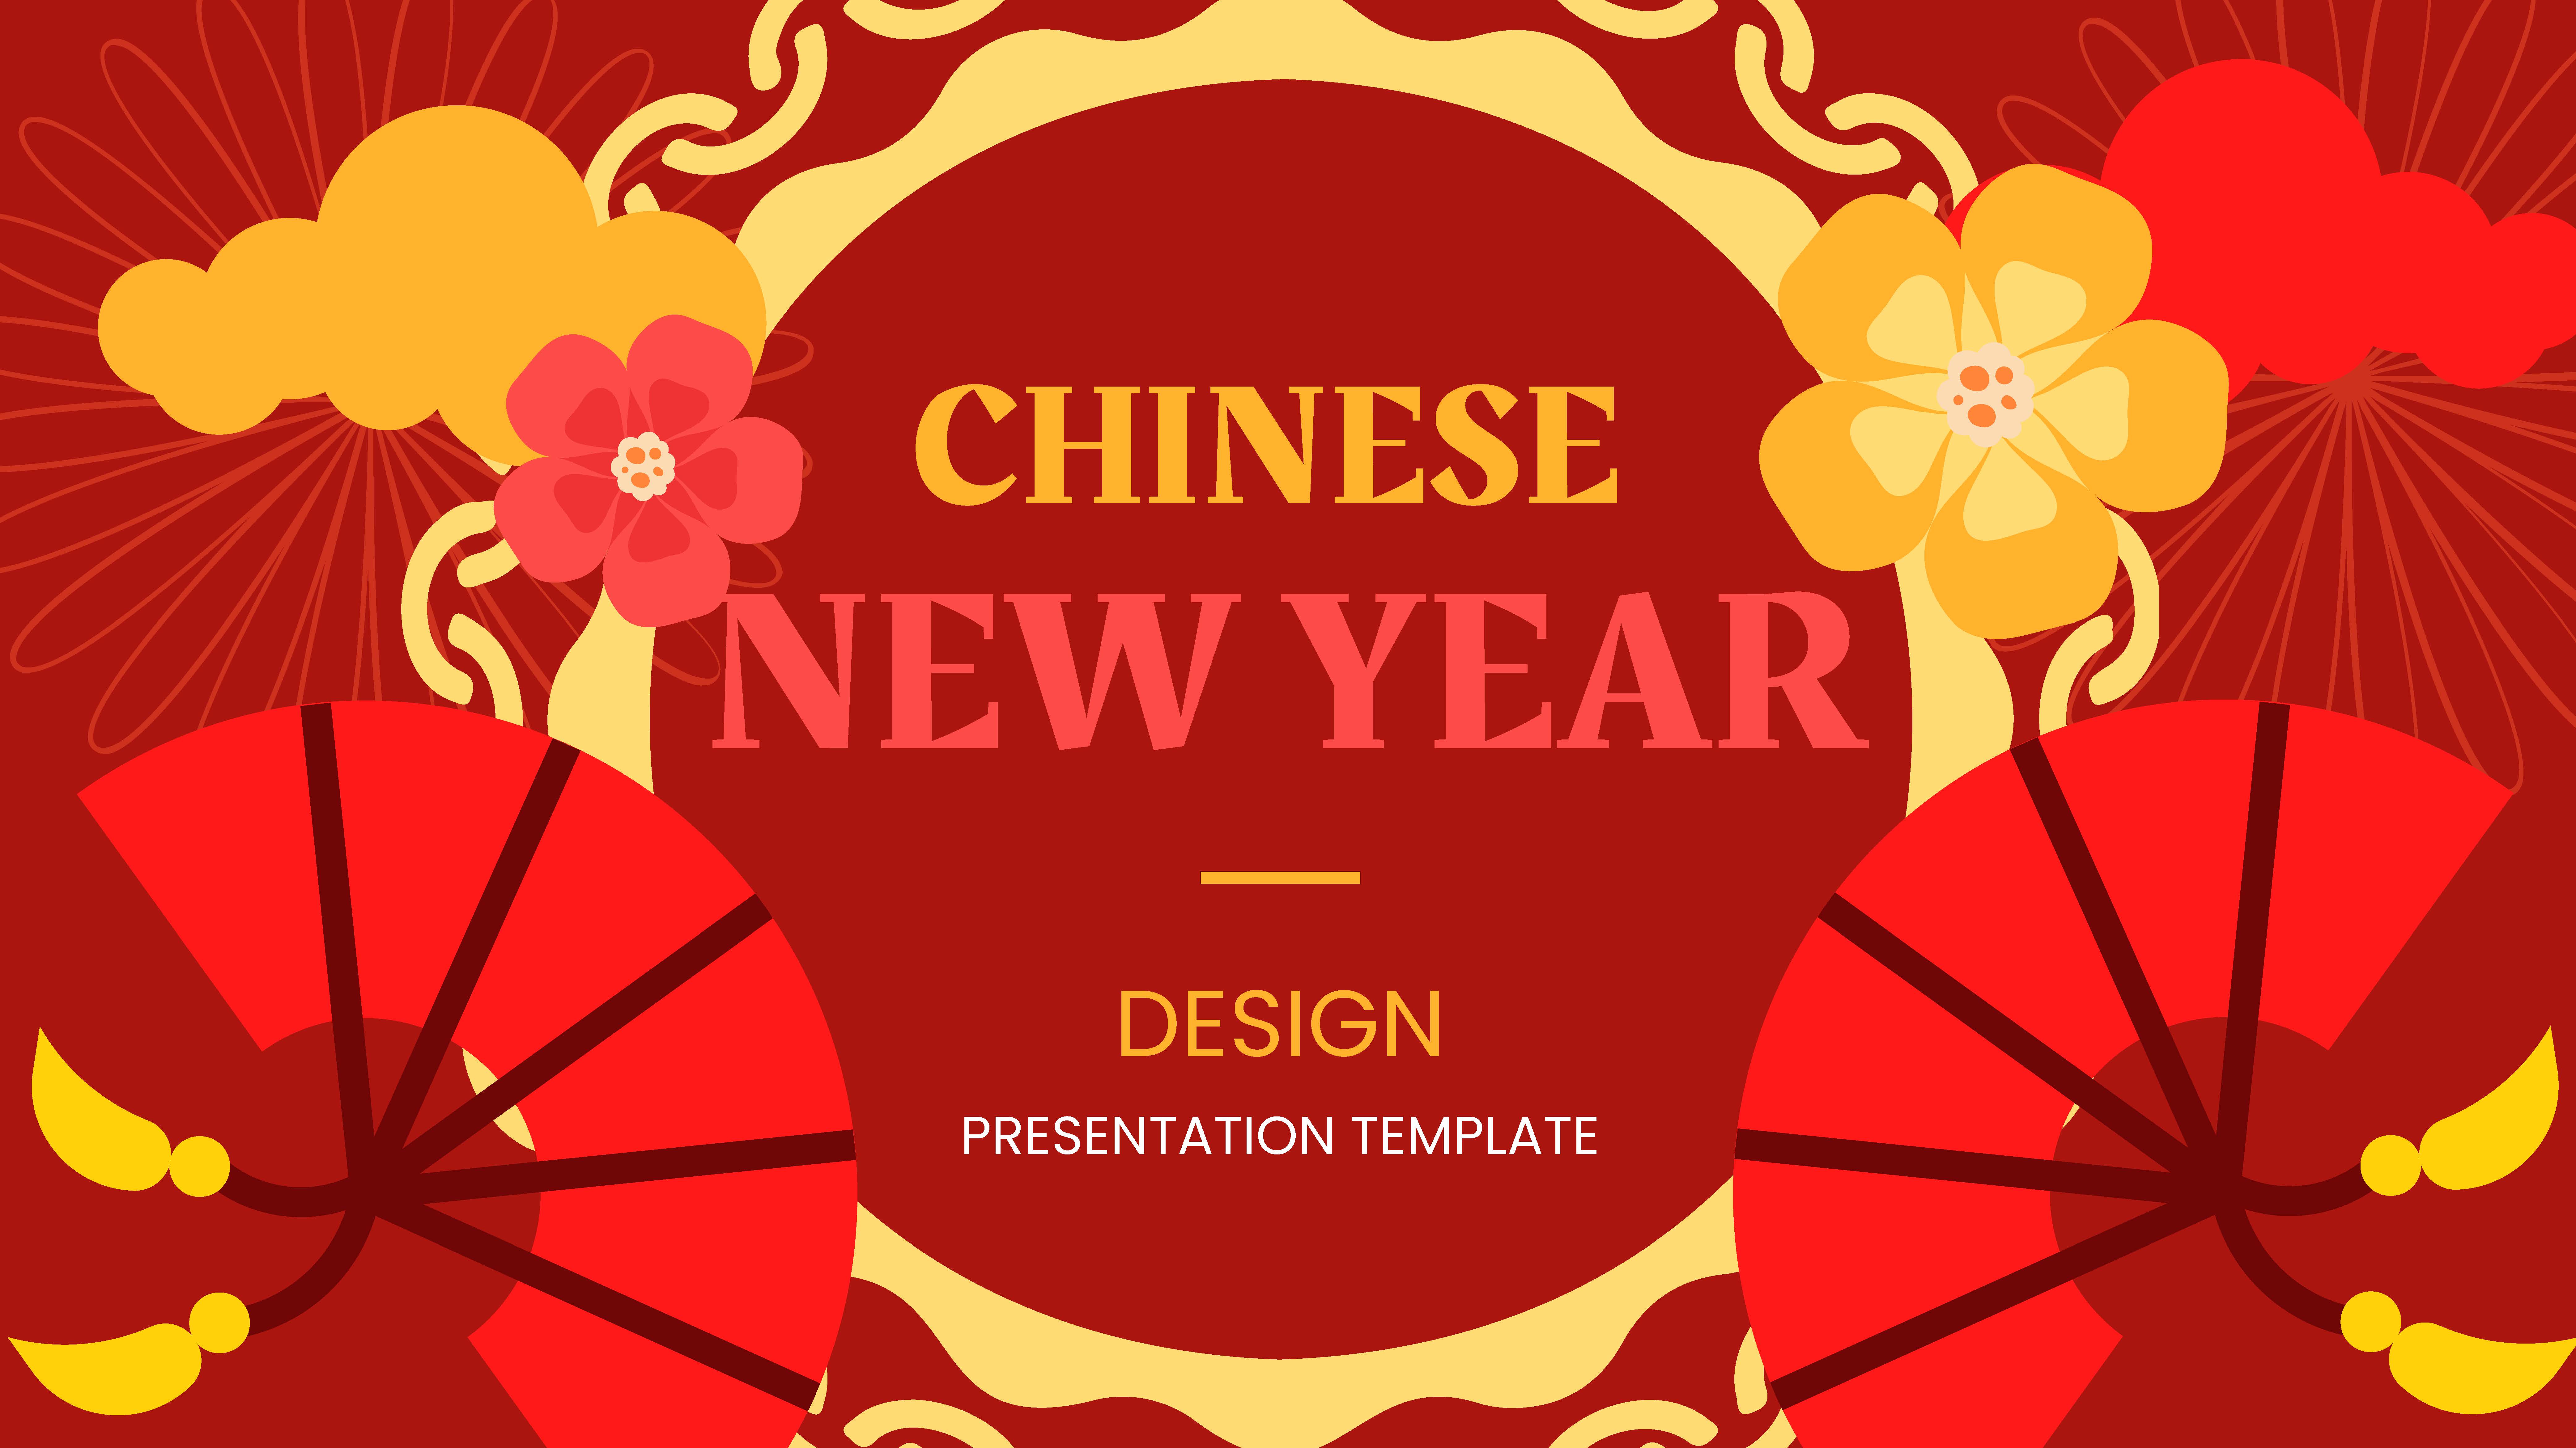 Chinese New Year Design Presentation